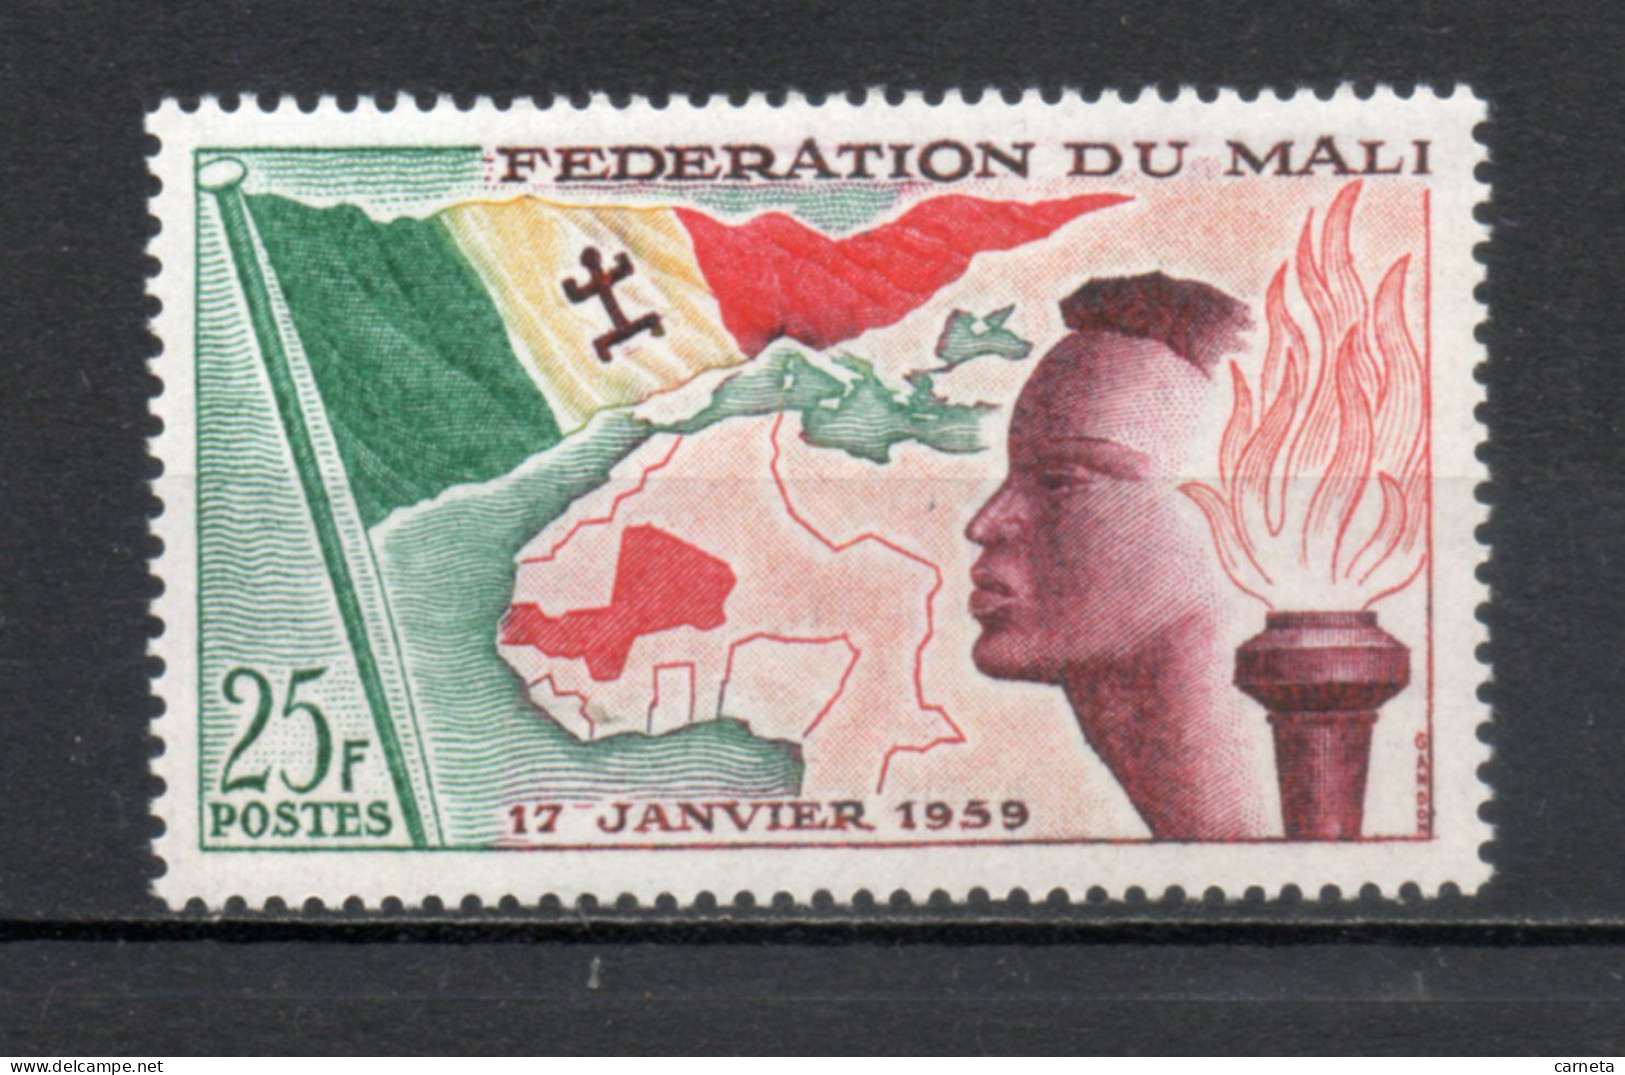 MALI  N° 1  NEUF SANS CHARNIERE  COTE 2.00€  CREATION DE LA FEDERATION DRAPEAU - Mali (1959-...)